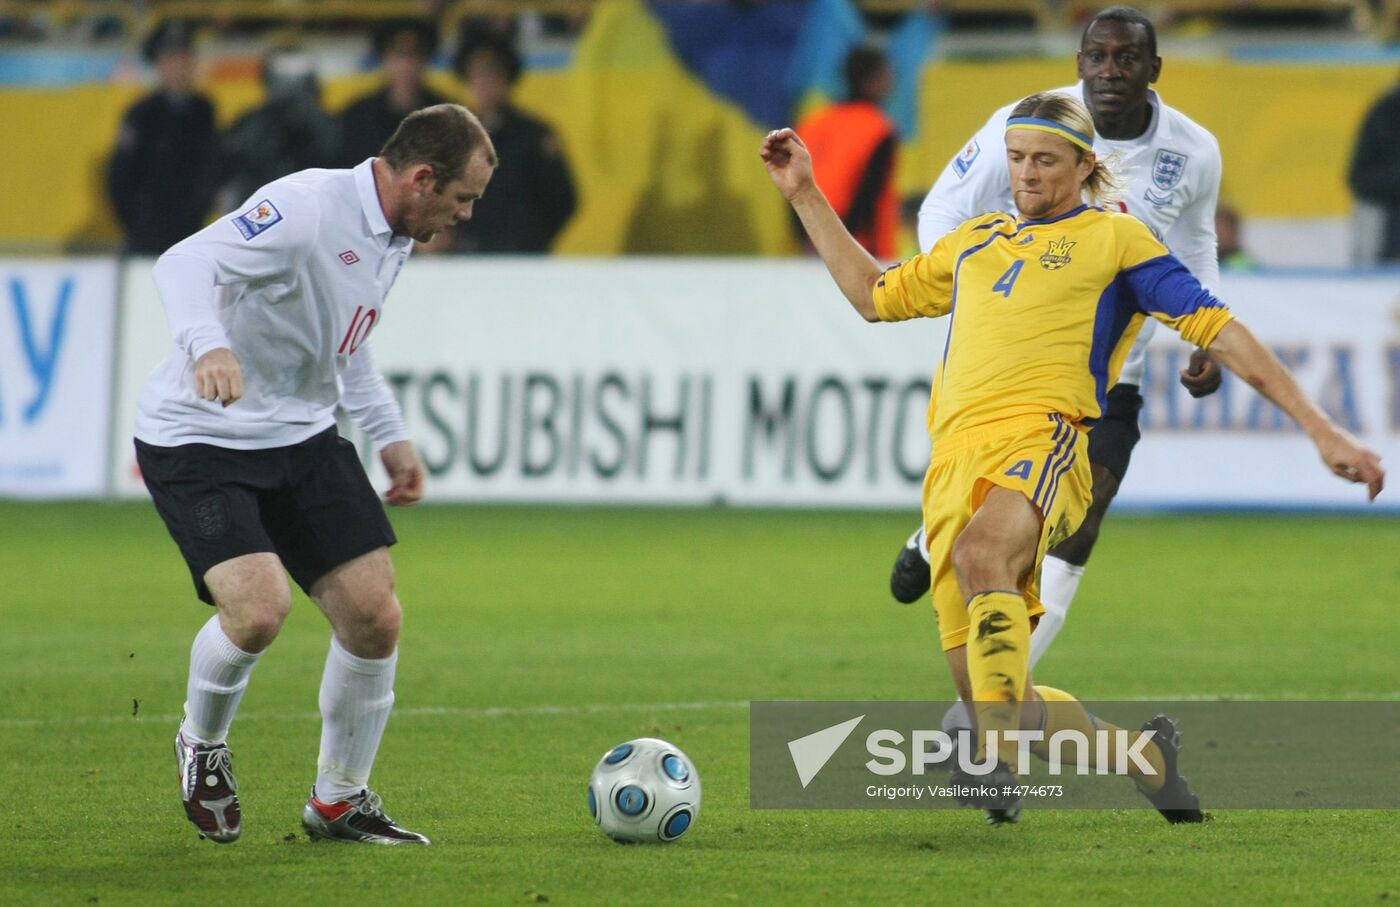 2010 FIFA World Cup qualifiers: Ukraine vs. England